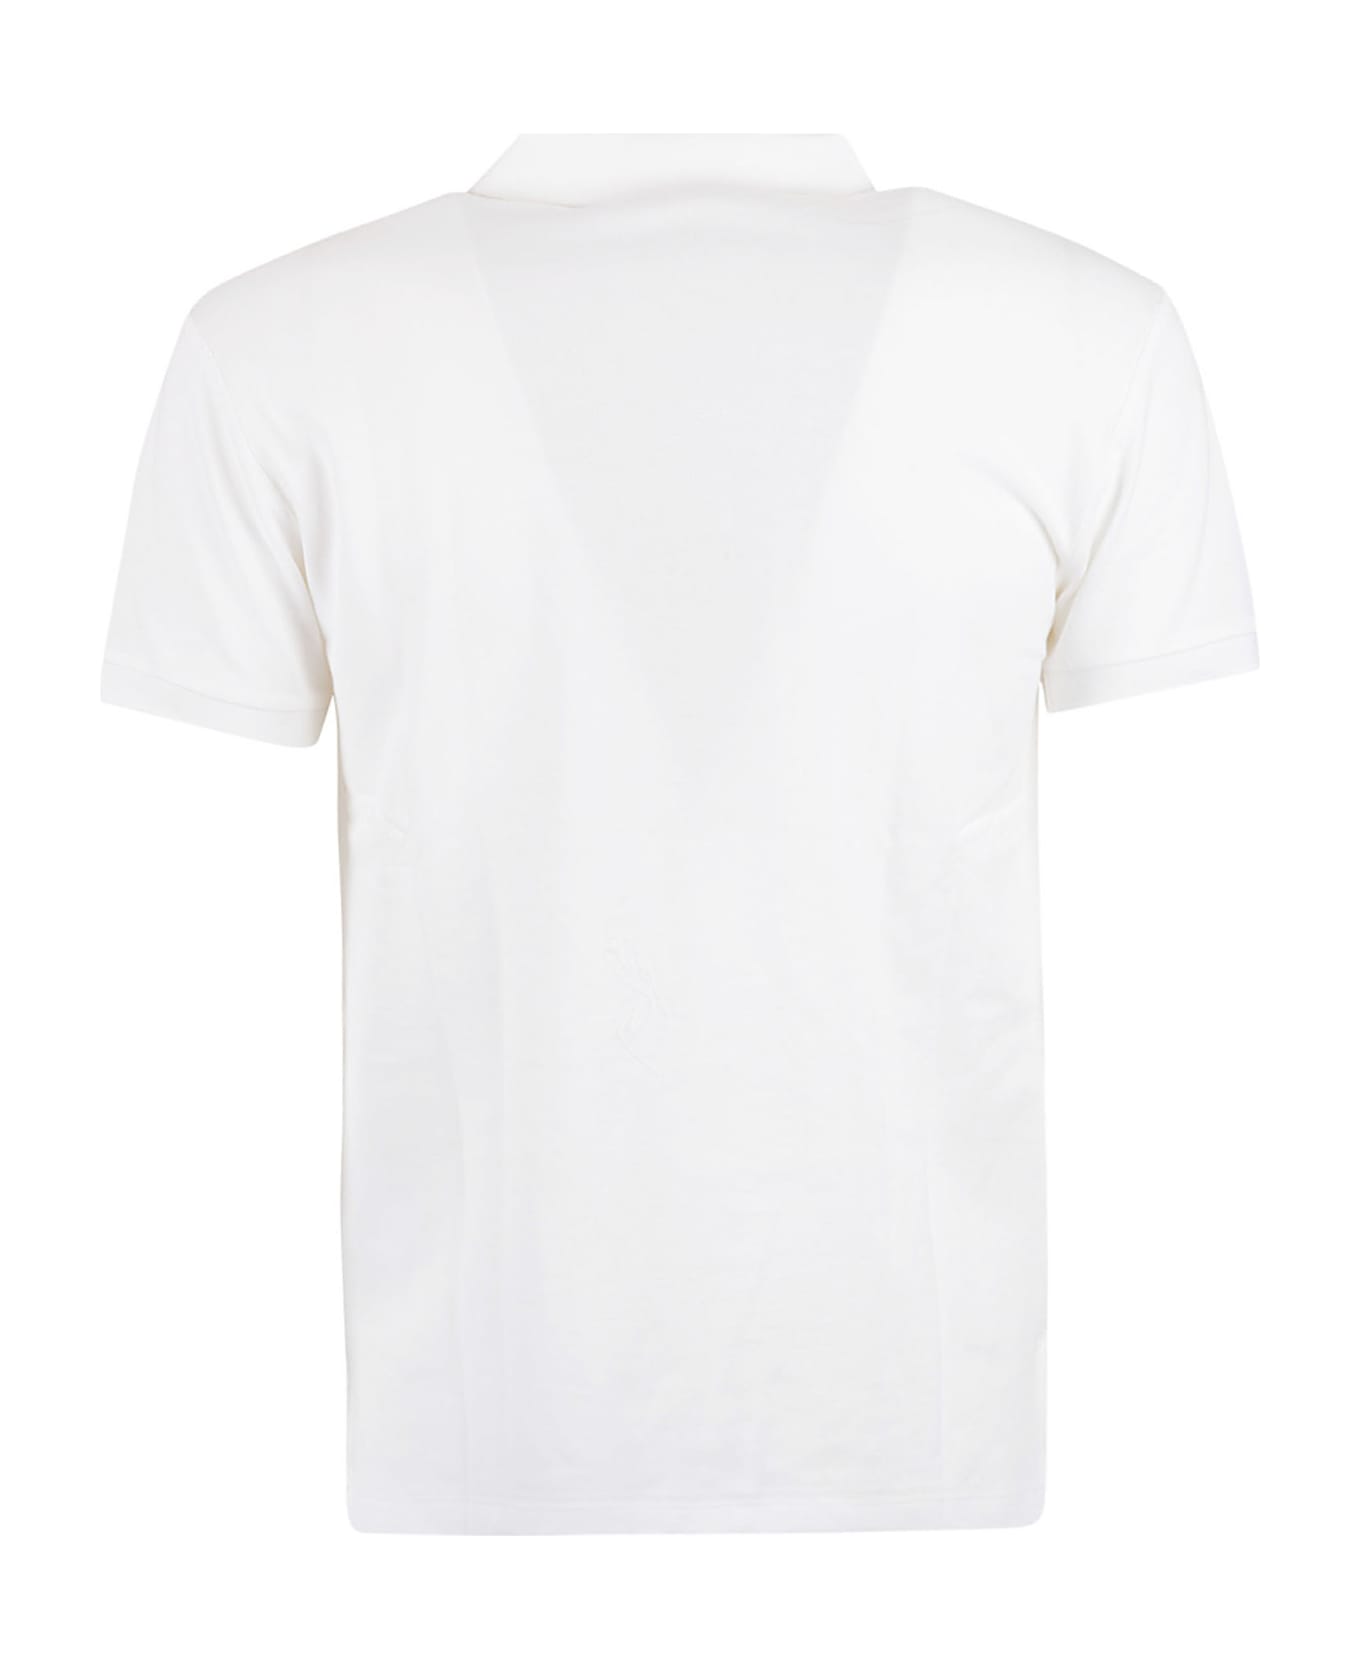 Ralph Lauren Logo Embroidered Polo Shirt - White